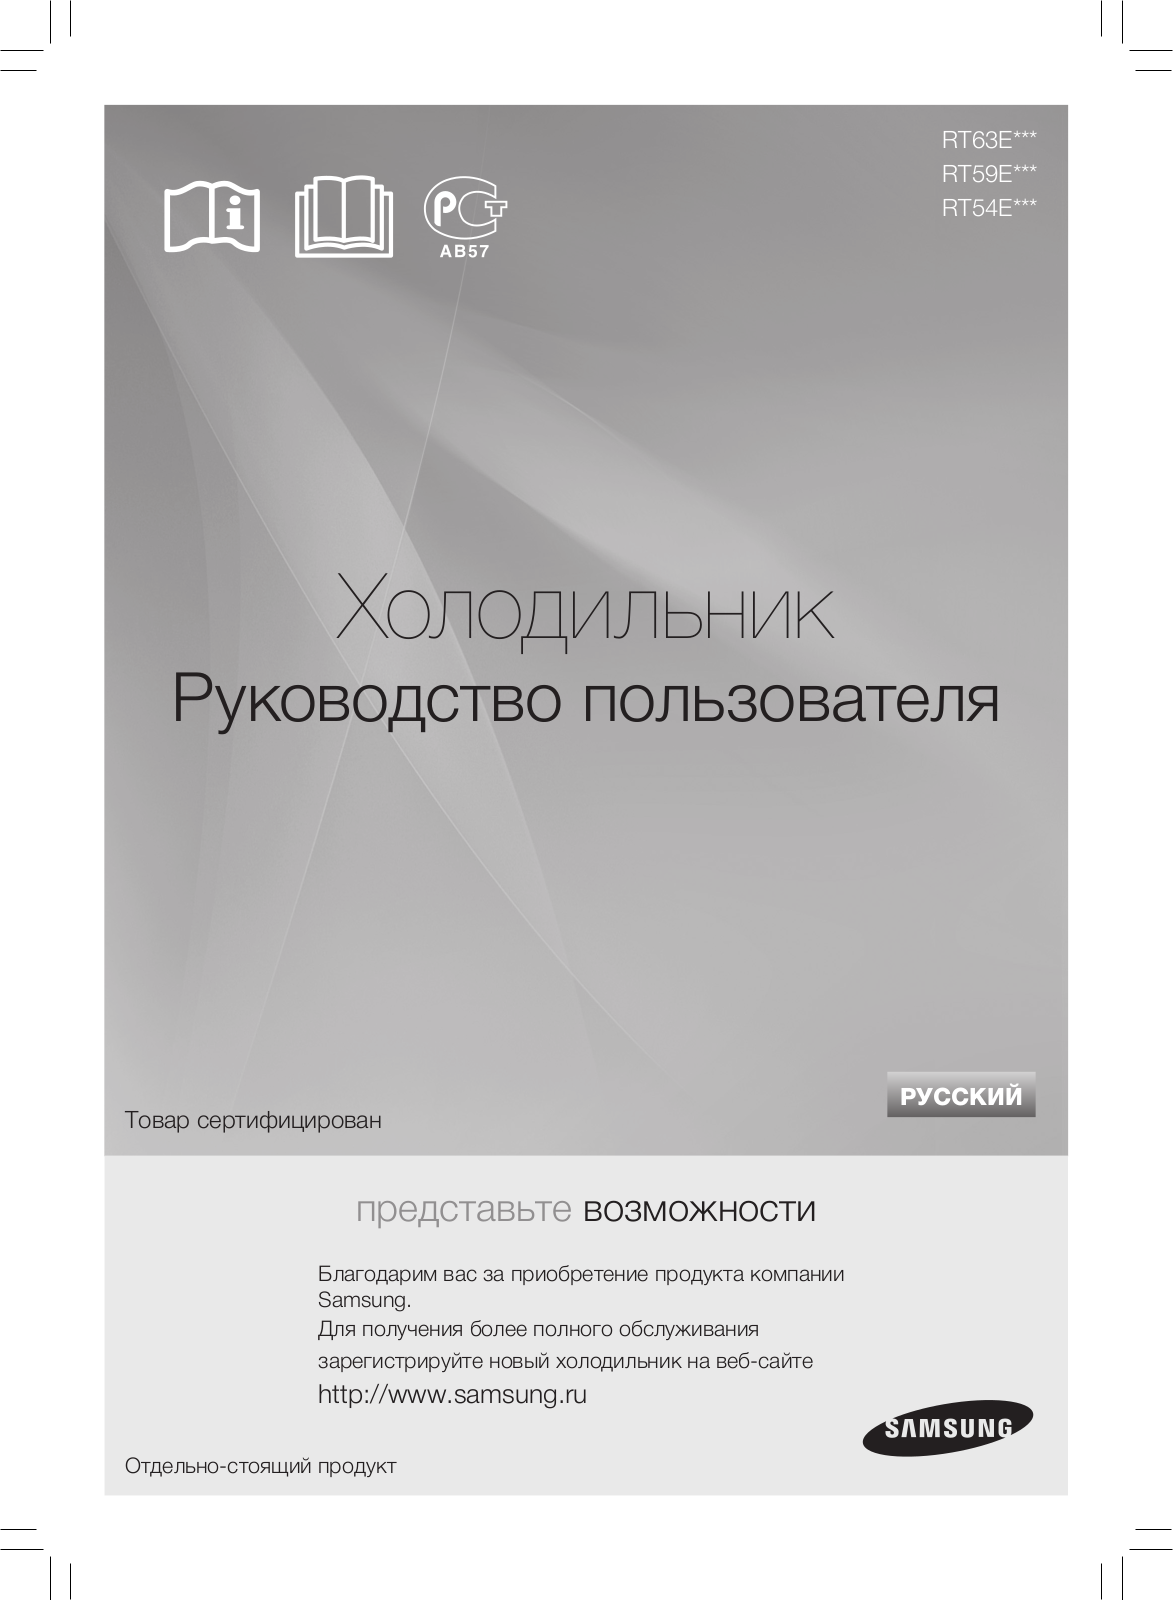 Samsung RT59EMVB User Manual